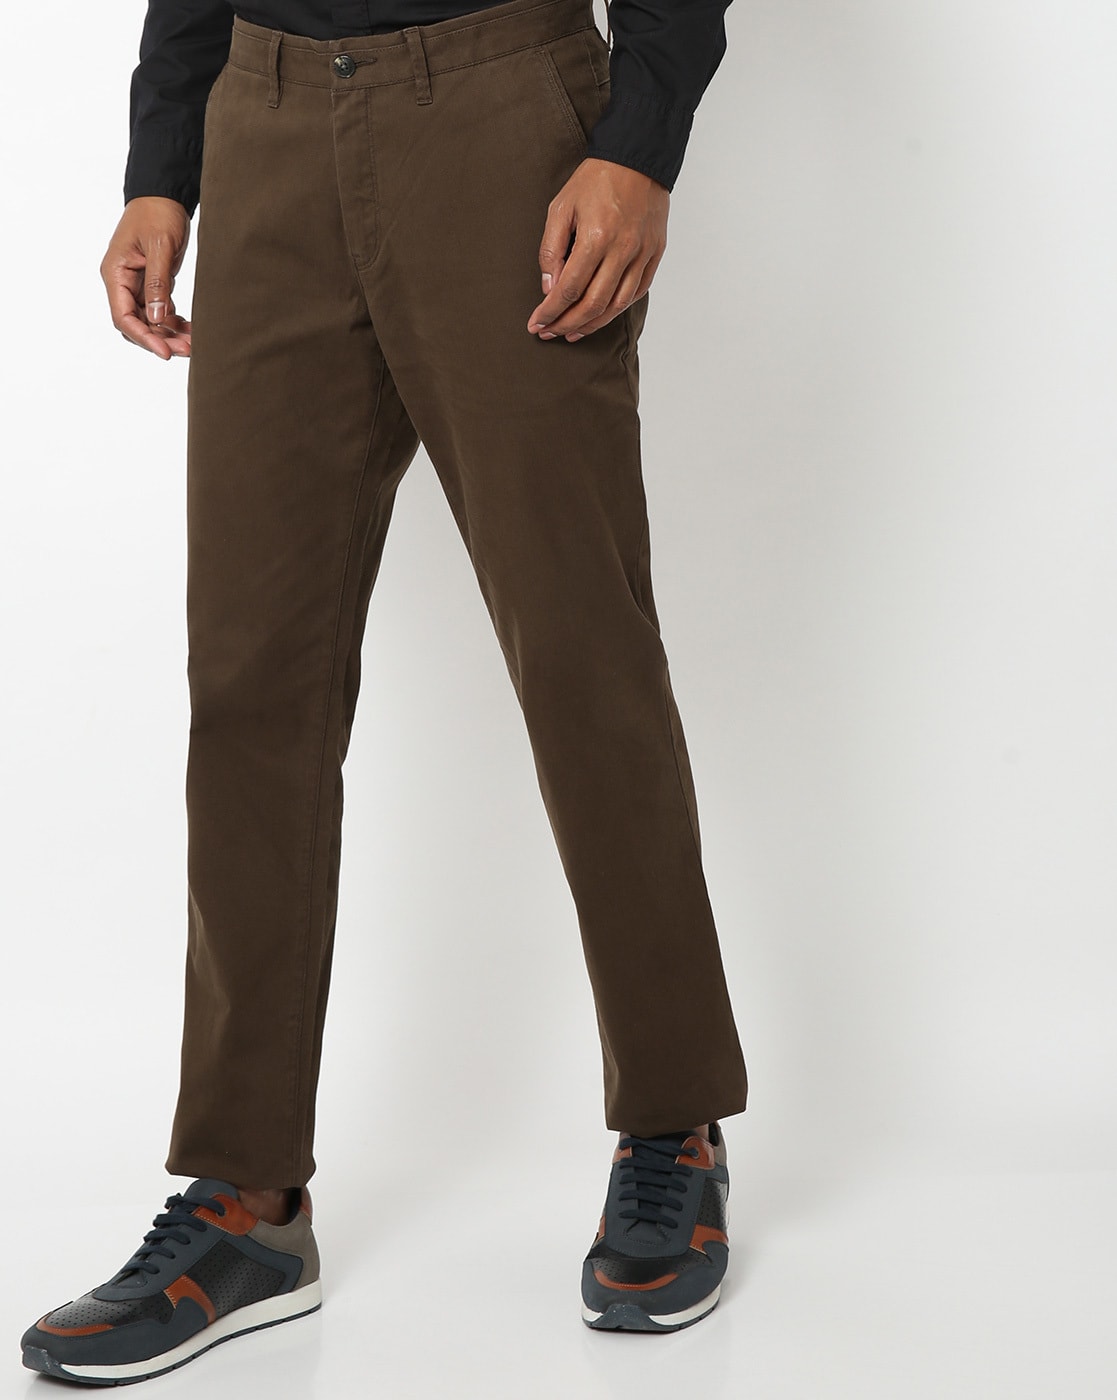 Buy Chocolate Brown Trousers  Pants for Men by NETPLAY Online  Ajiocom